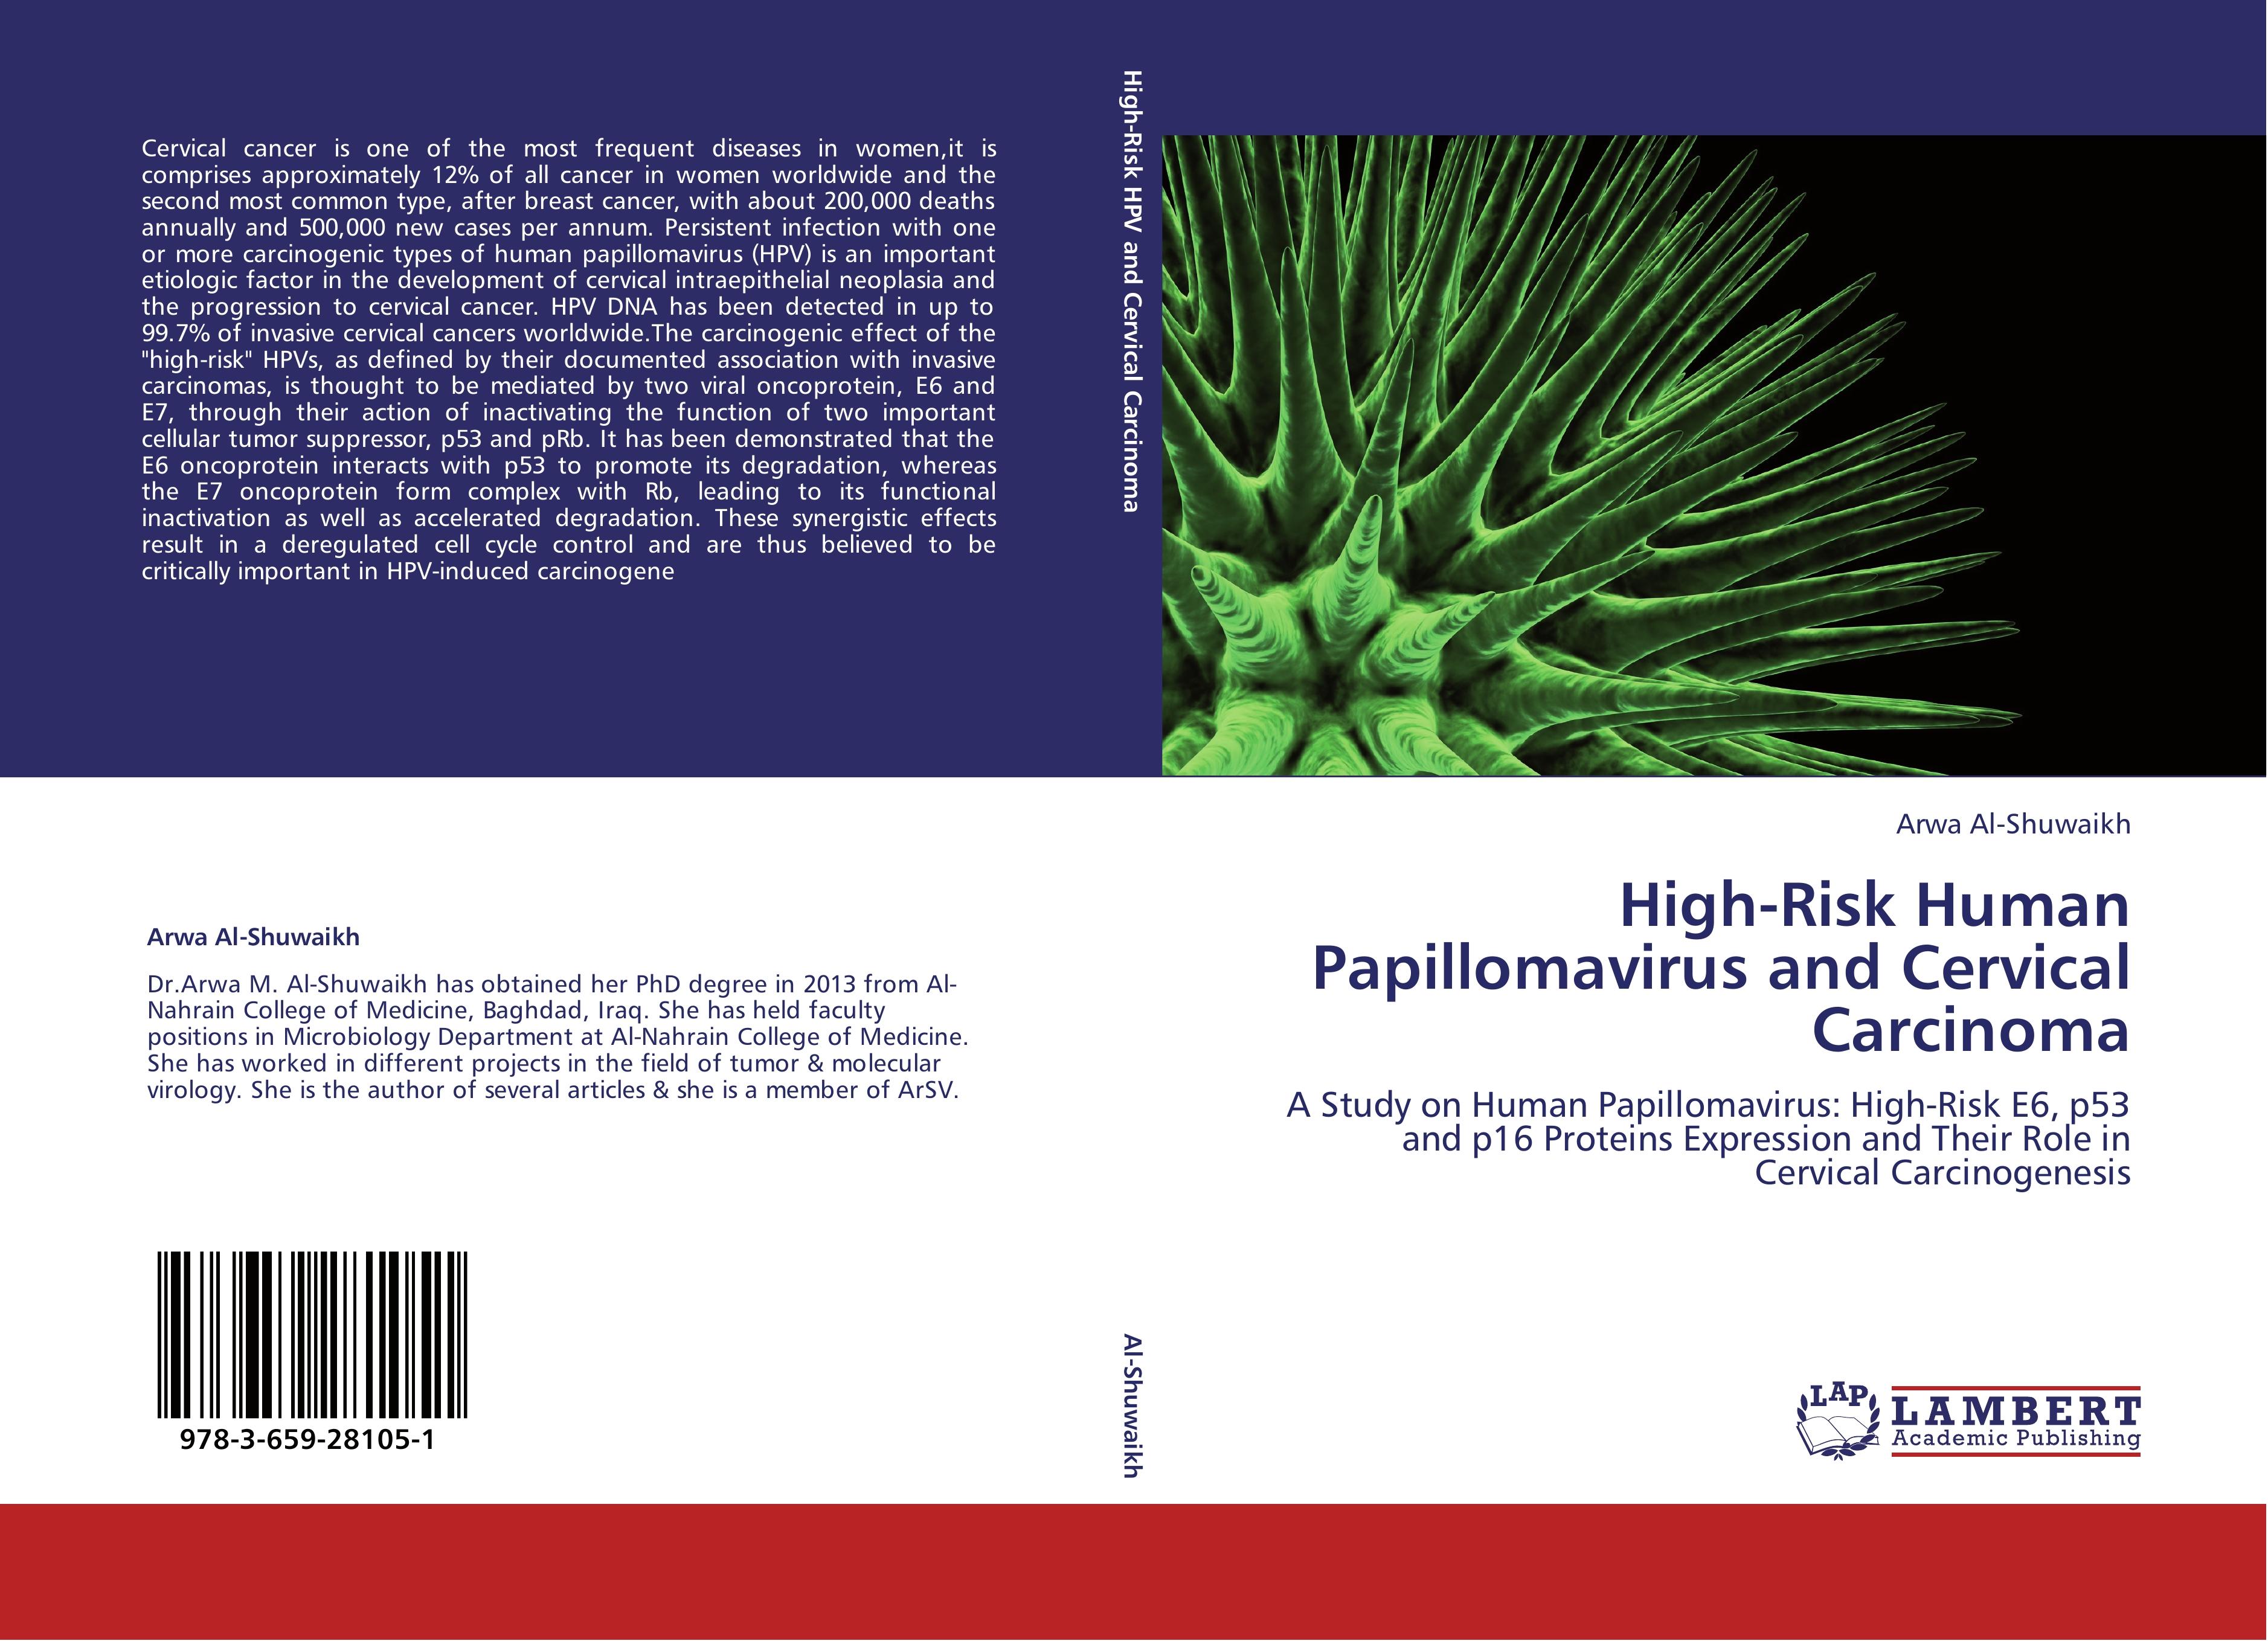 High-Risk Human Papillomavirus and Cervical Carcinoma - Arwa Al-Shuwaikh